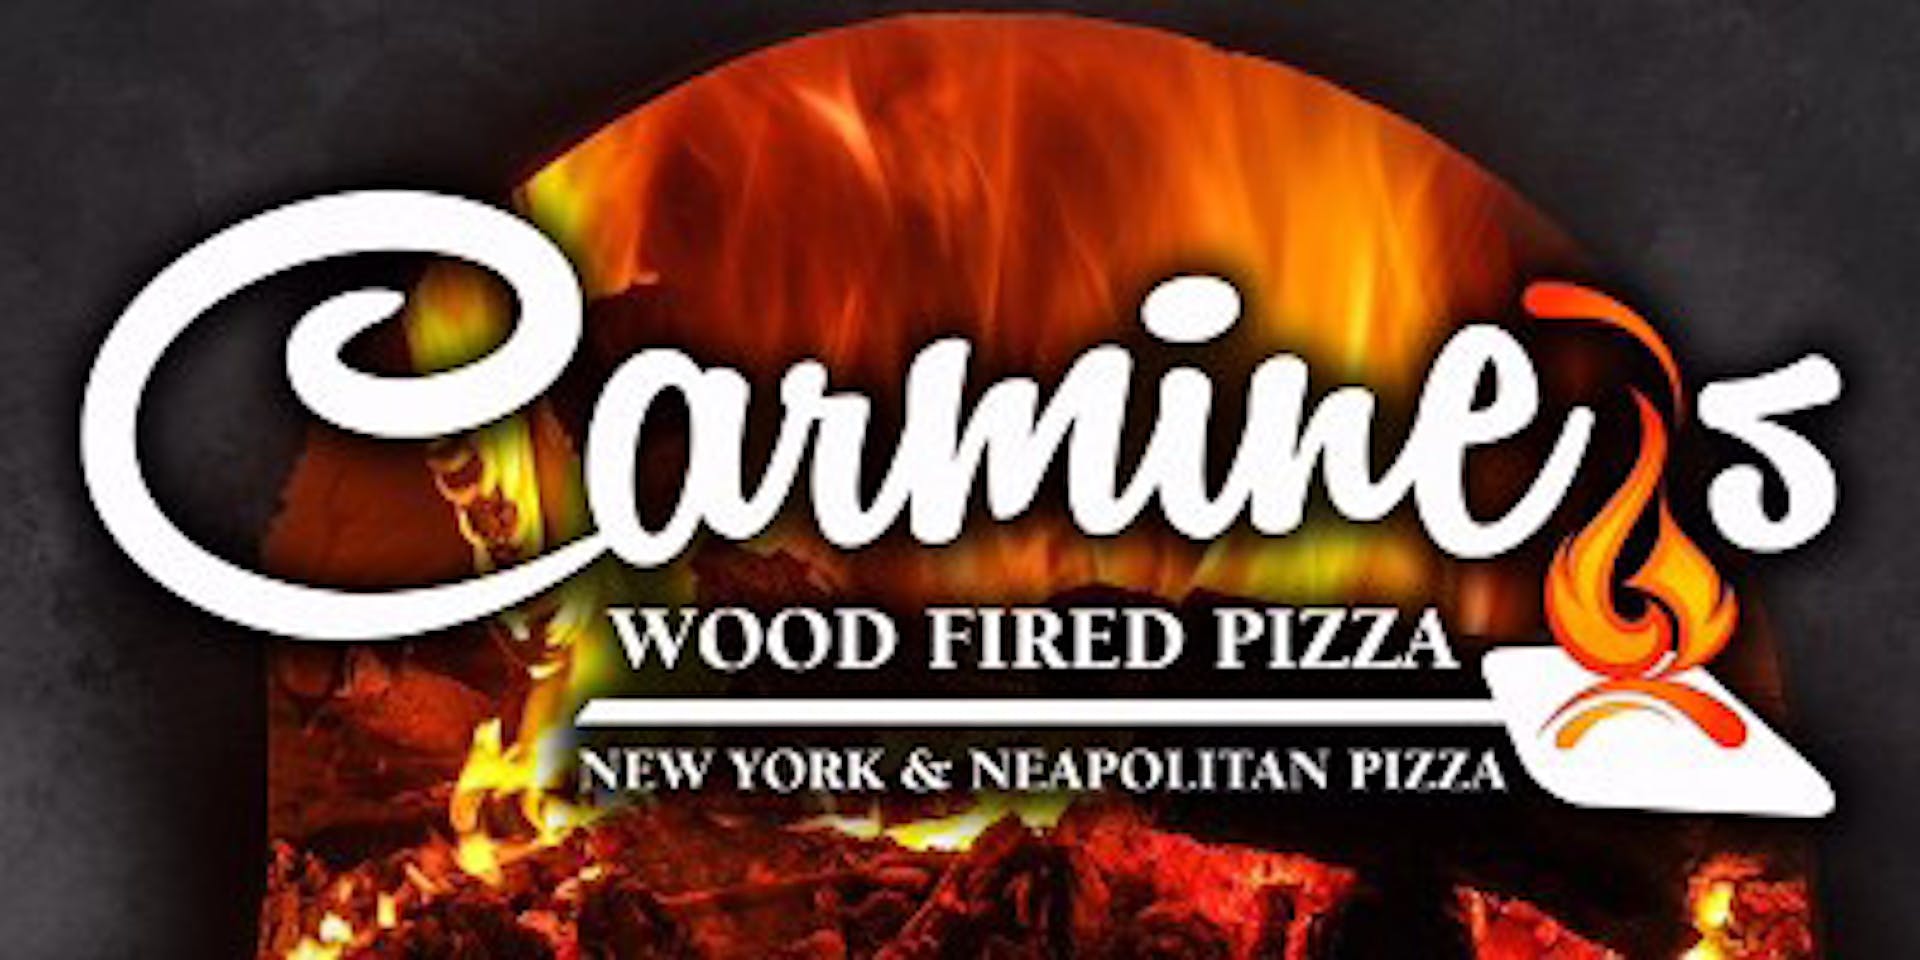 Carmine's Wood Fired Pizza